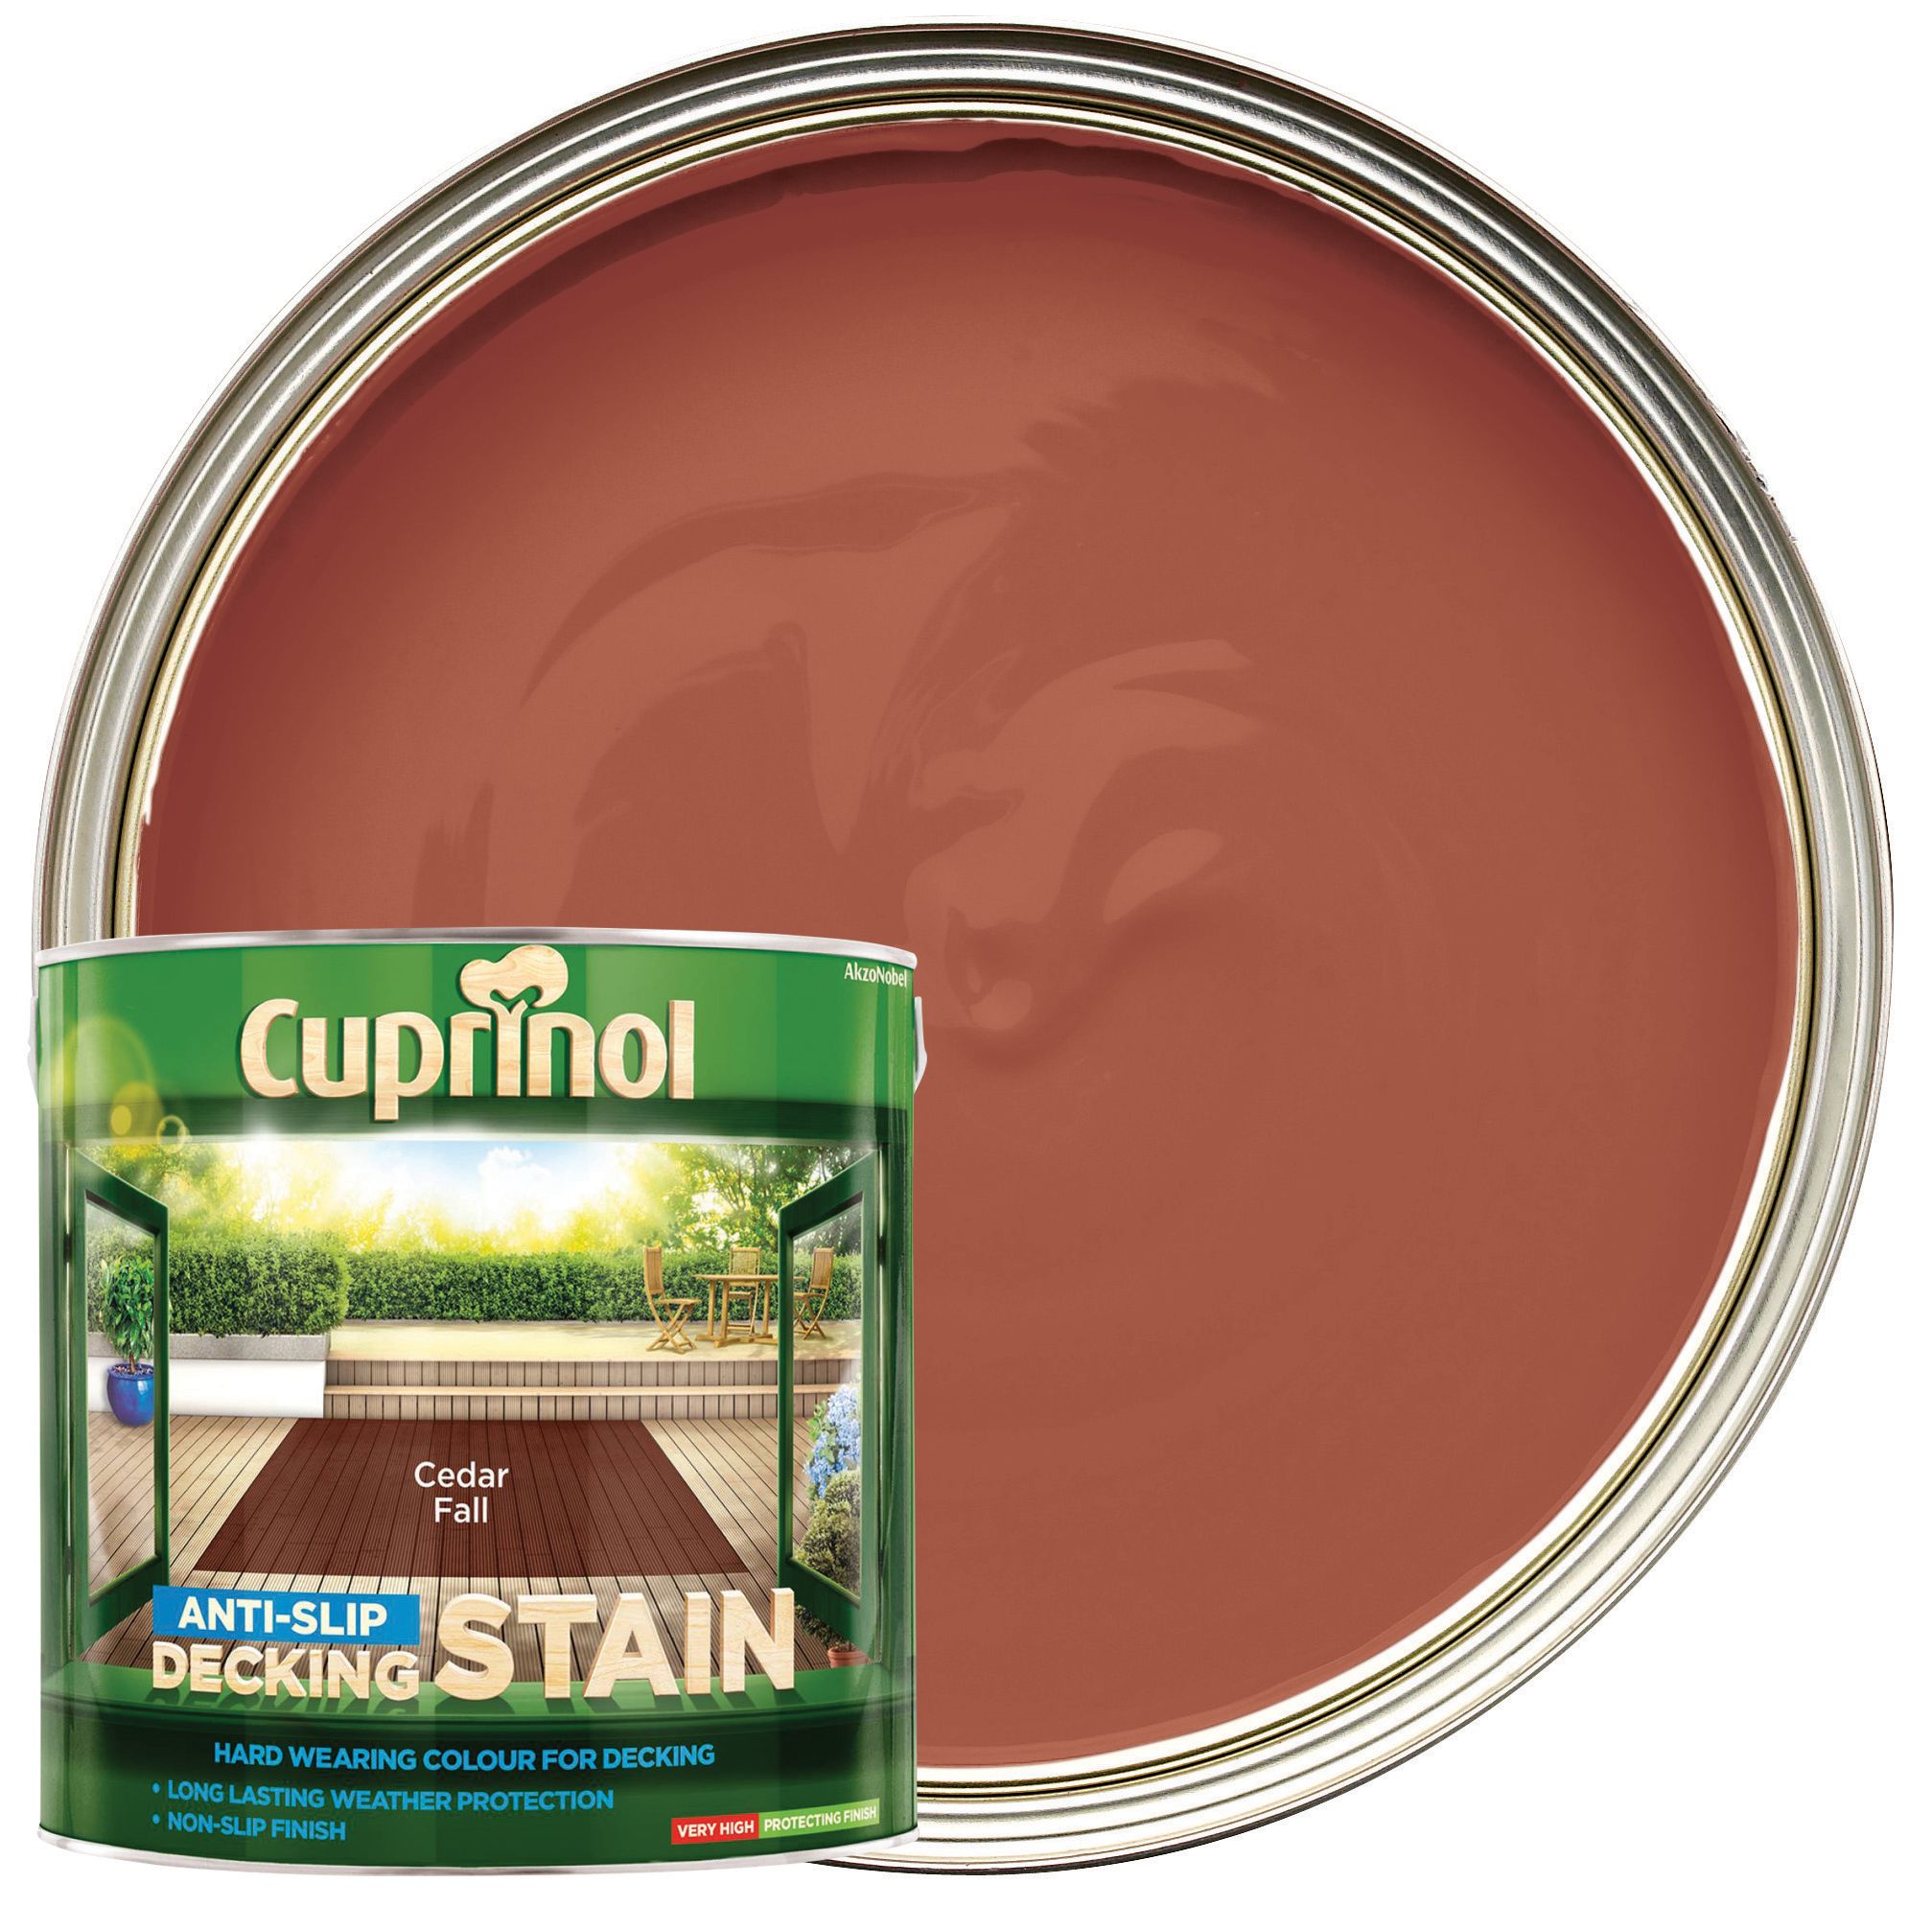 Image of Cuprinol Anti-Slip Decking Stain - Cedar Fall 2.5L